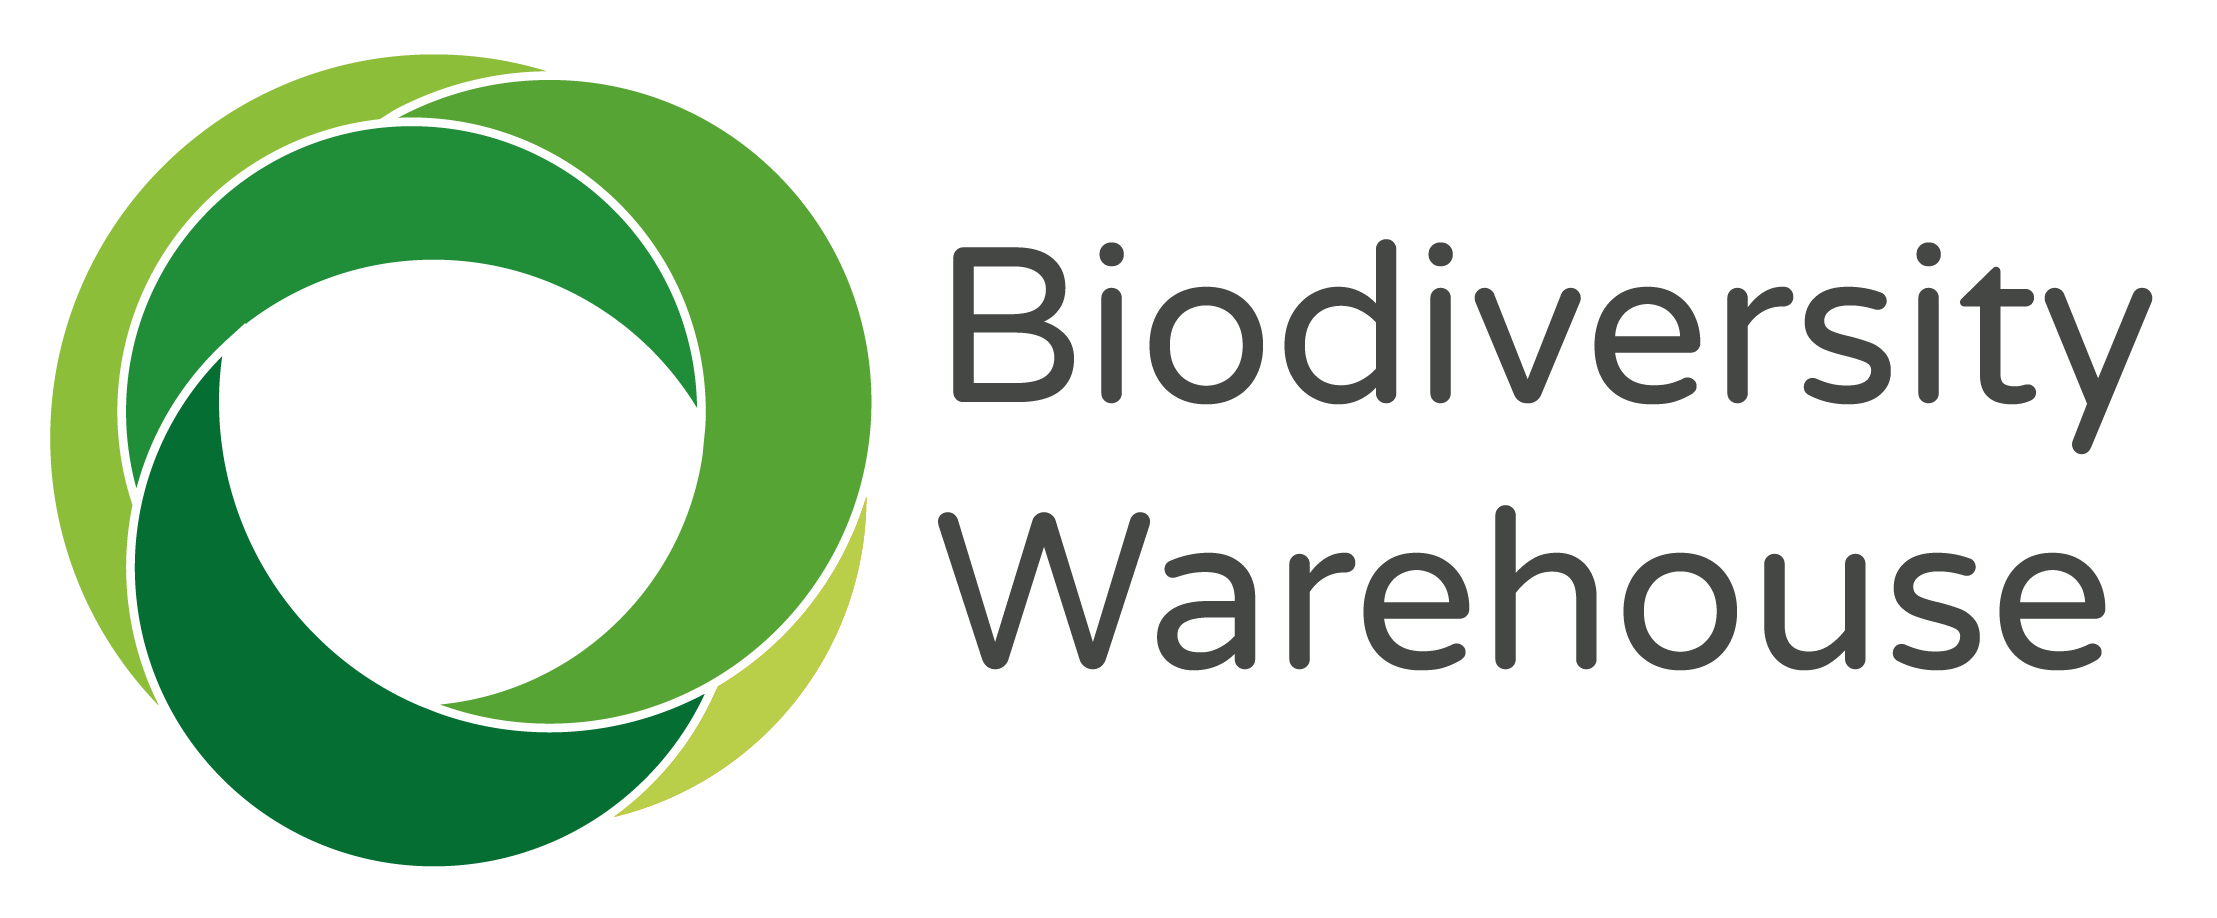 Biodiversity Warehouse